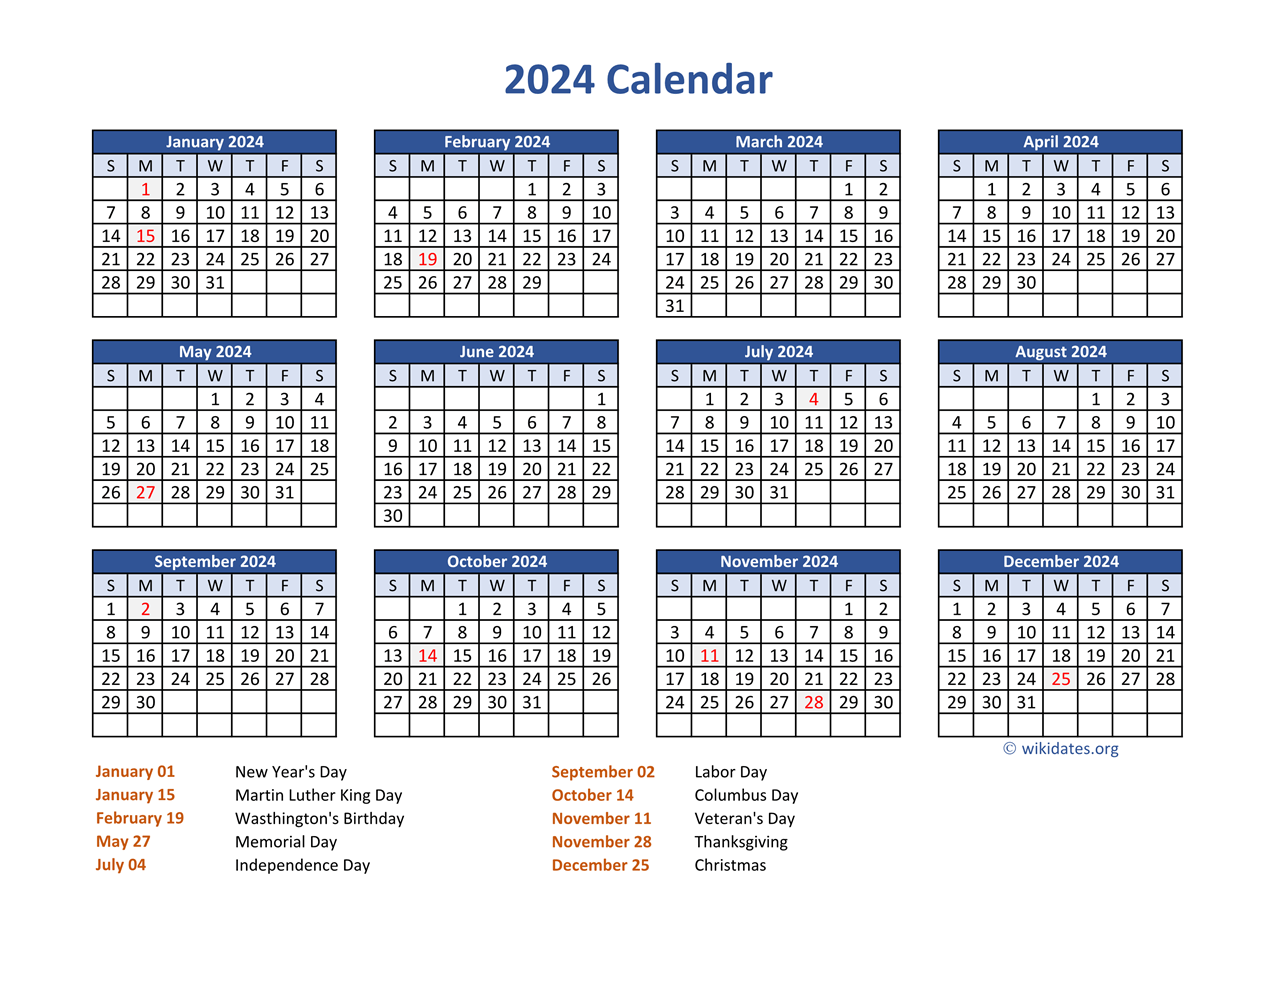 Pdf Calendar 2024 With Federal Holidays | Wikidates for 2024 Printable Holiday Calendar